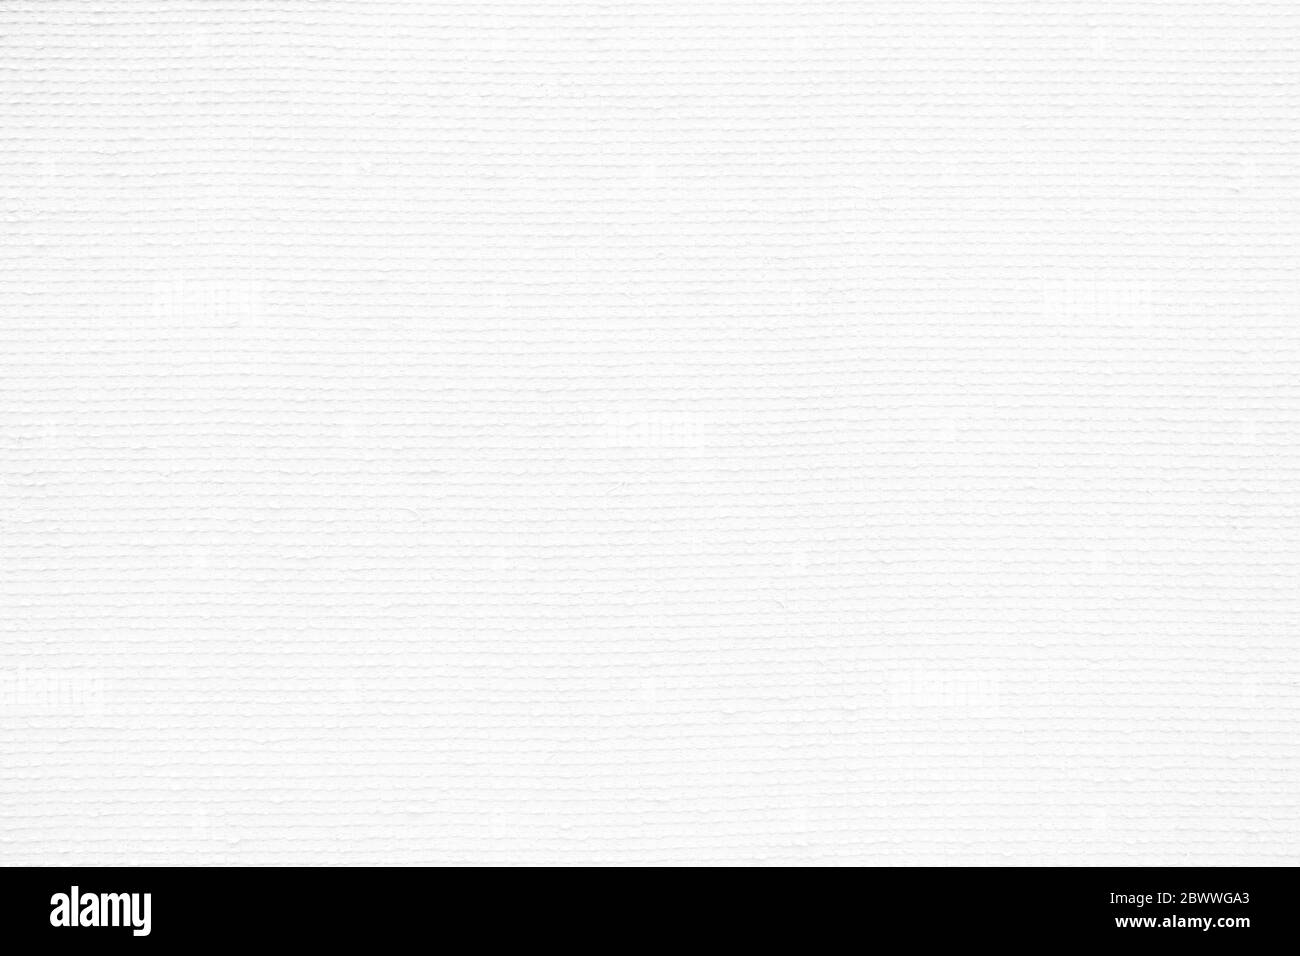 White Grunge Rubber Texture Background. Stock Photo